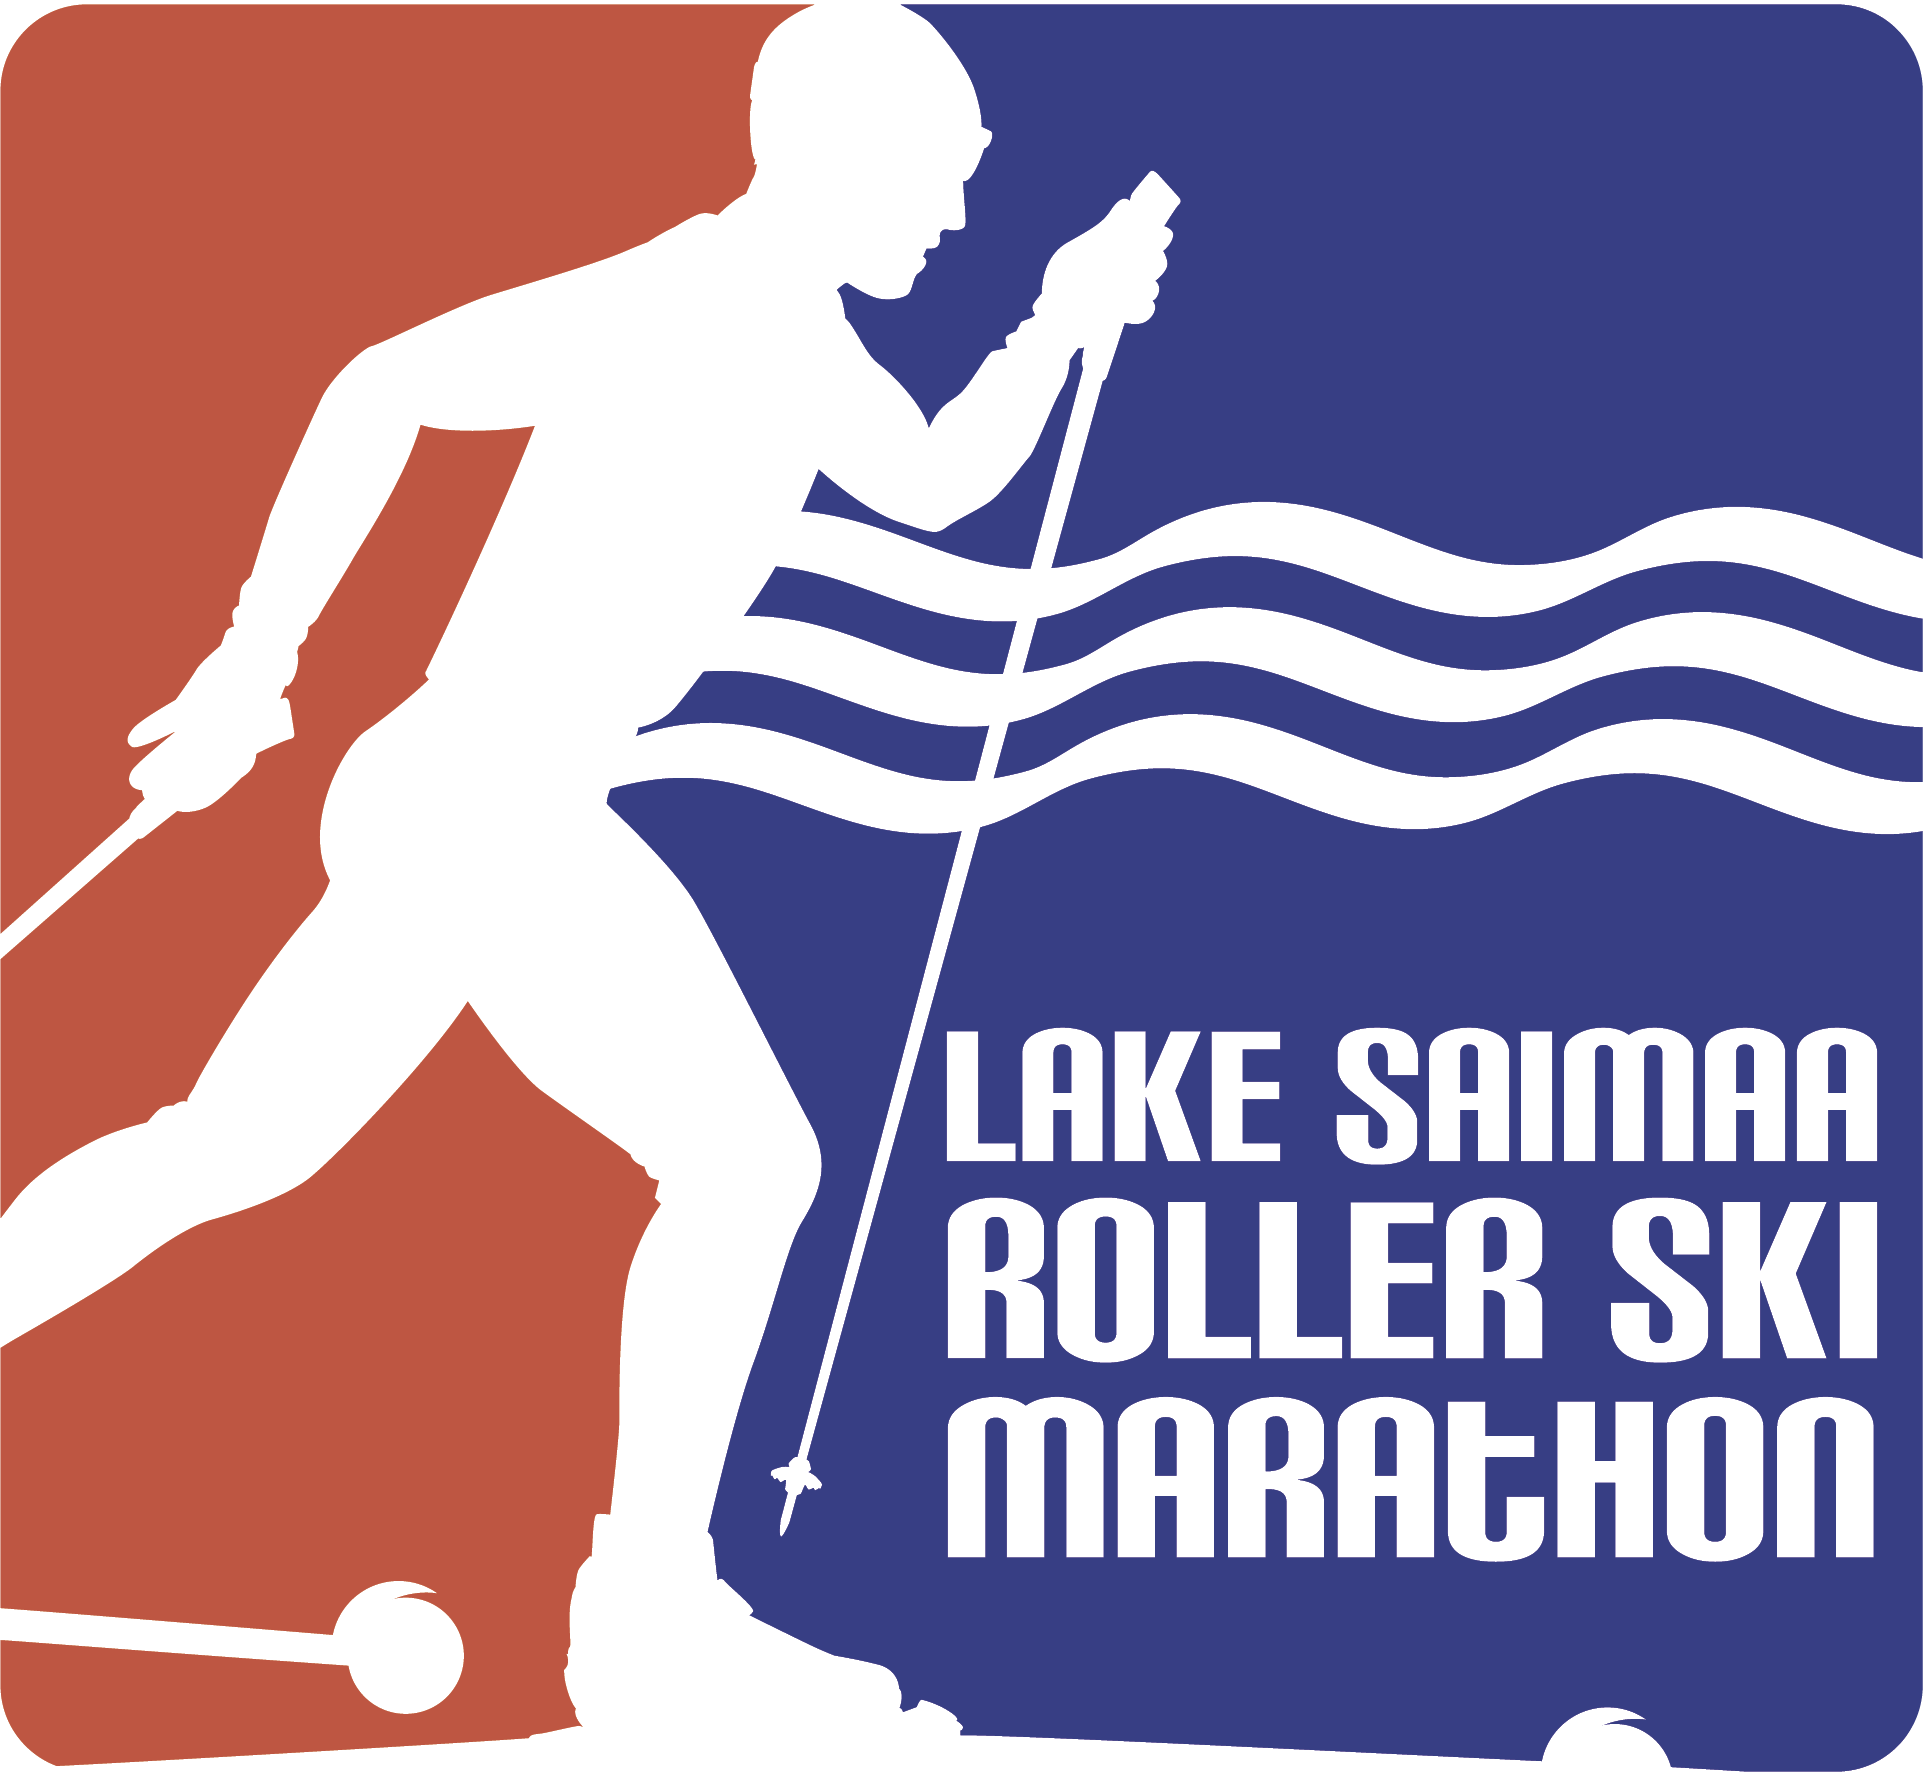 Lake Saimaa Roller Ski Marathon